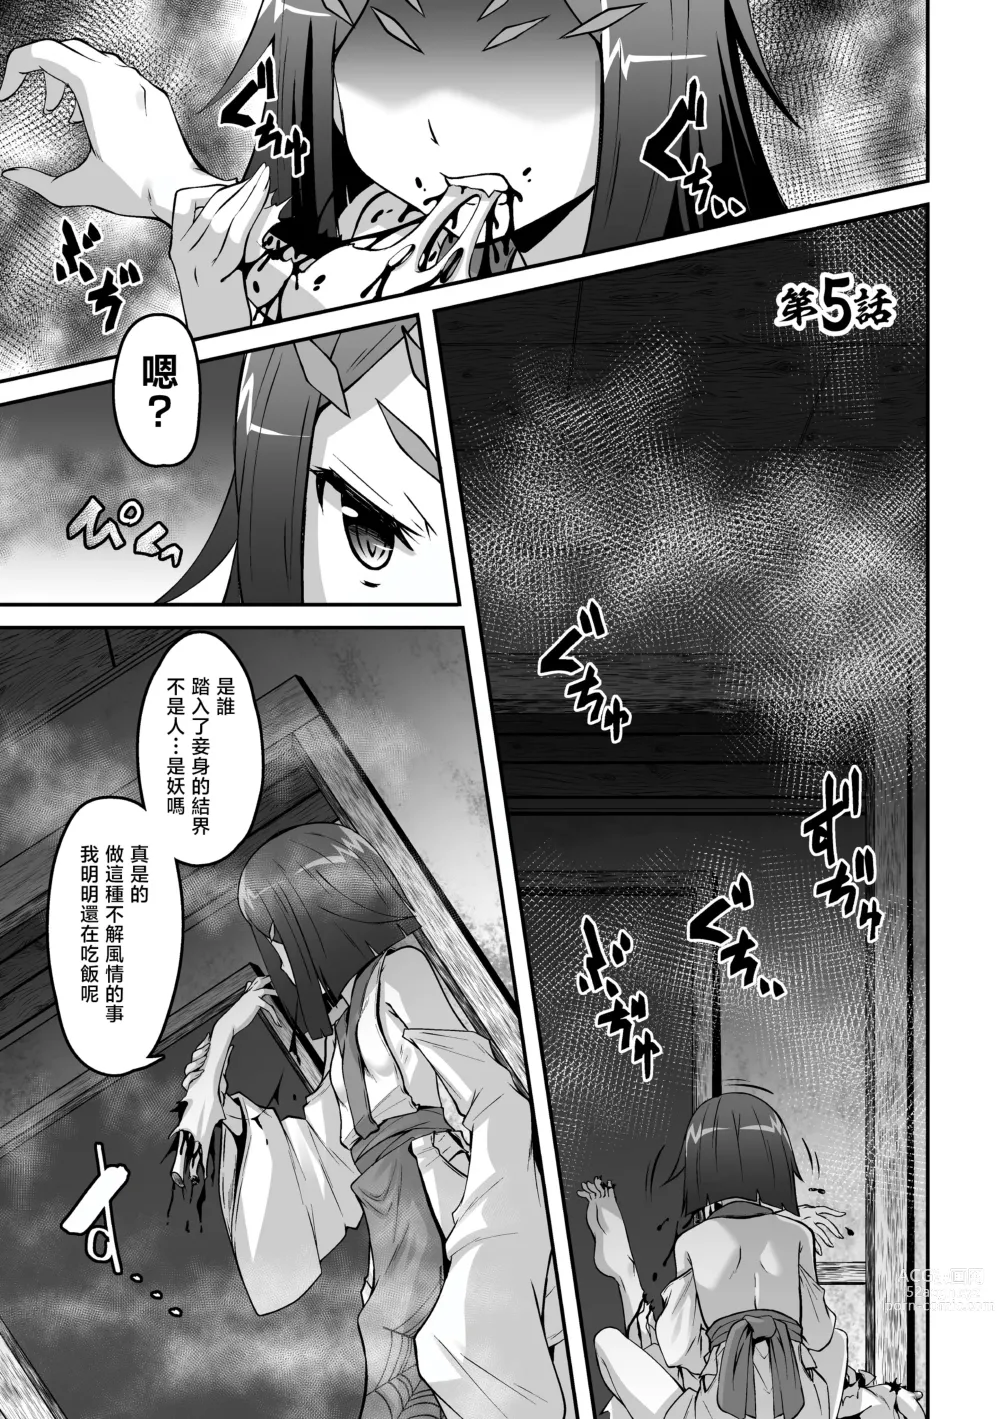 Page 4 of manga Youko Inmon Kitan 5